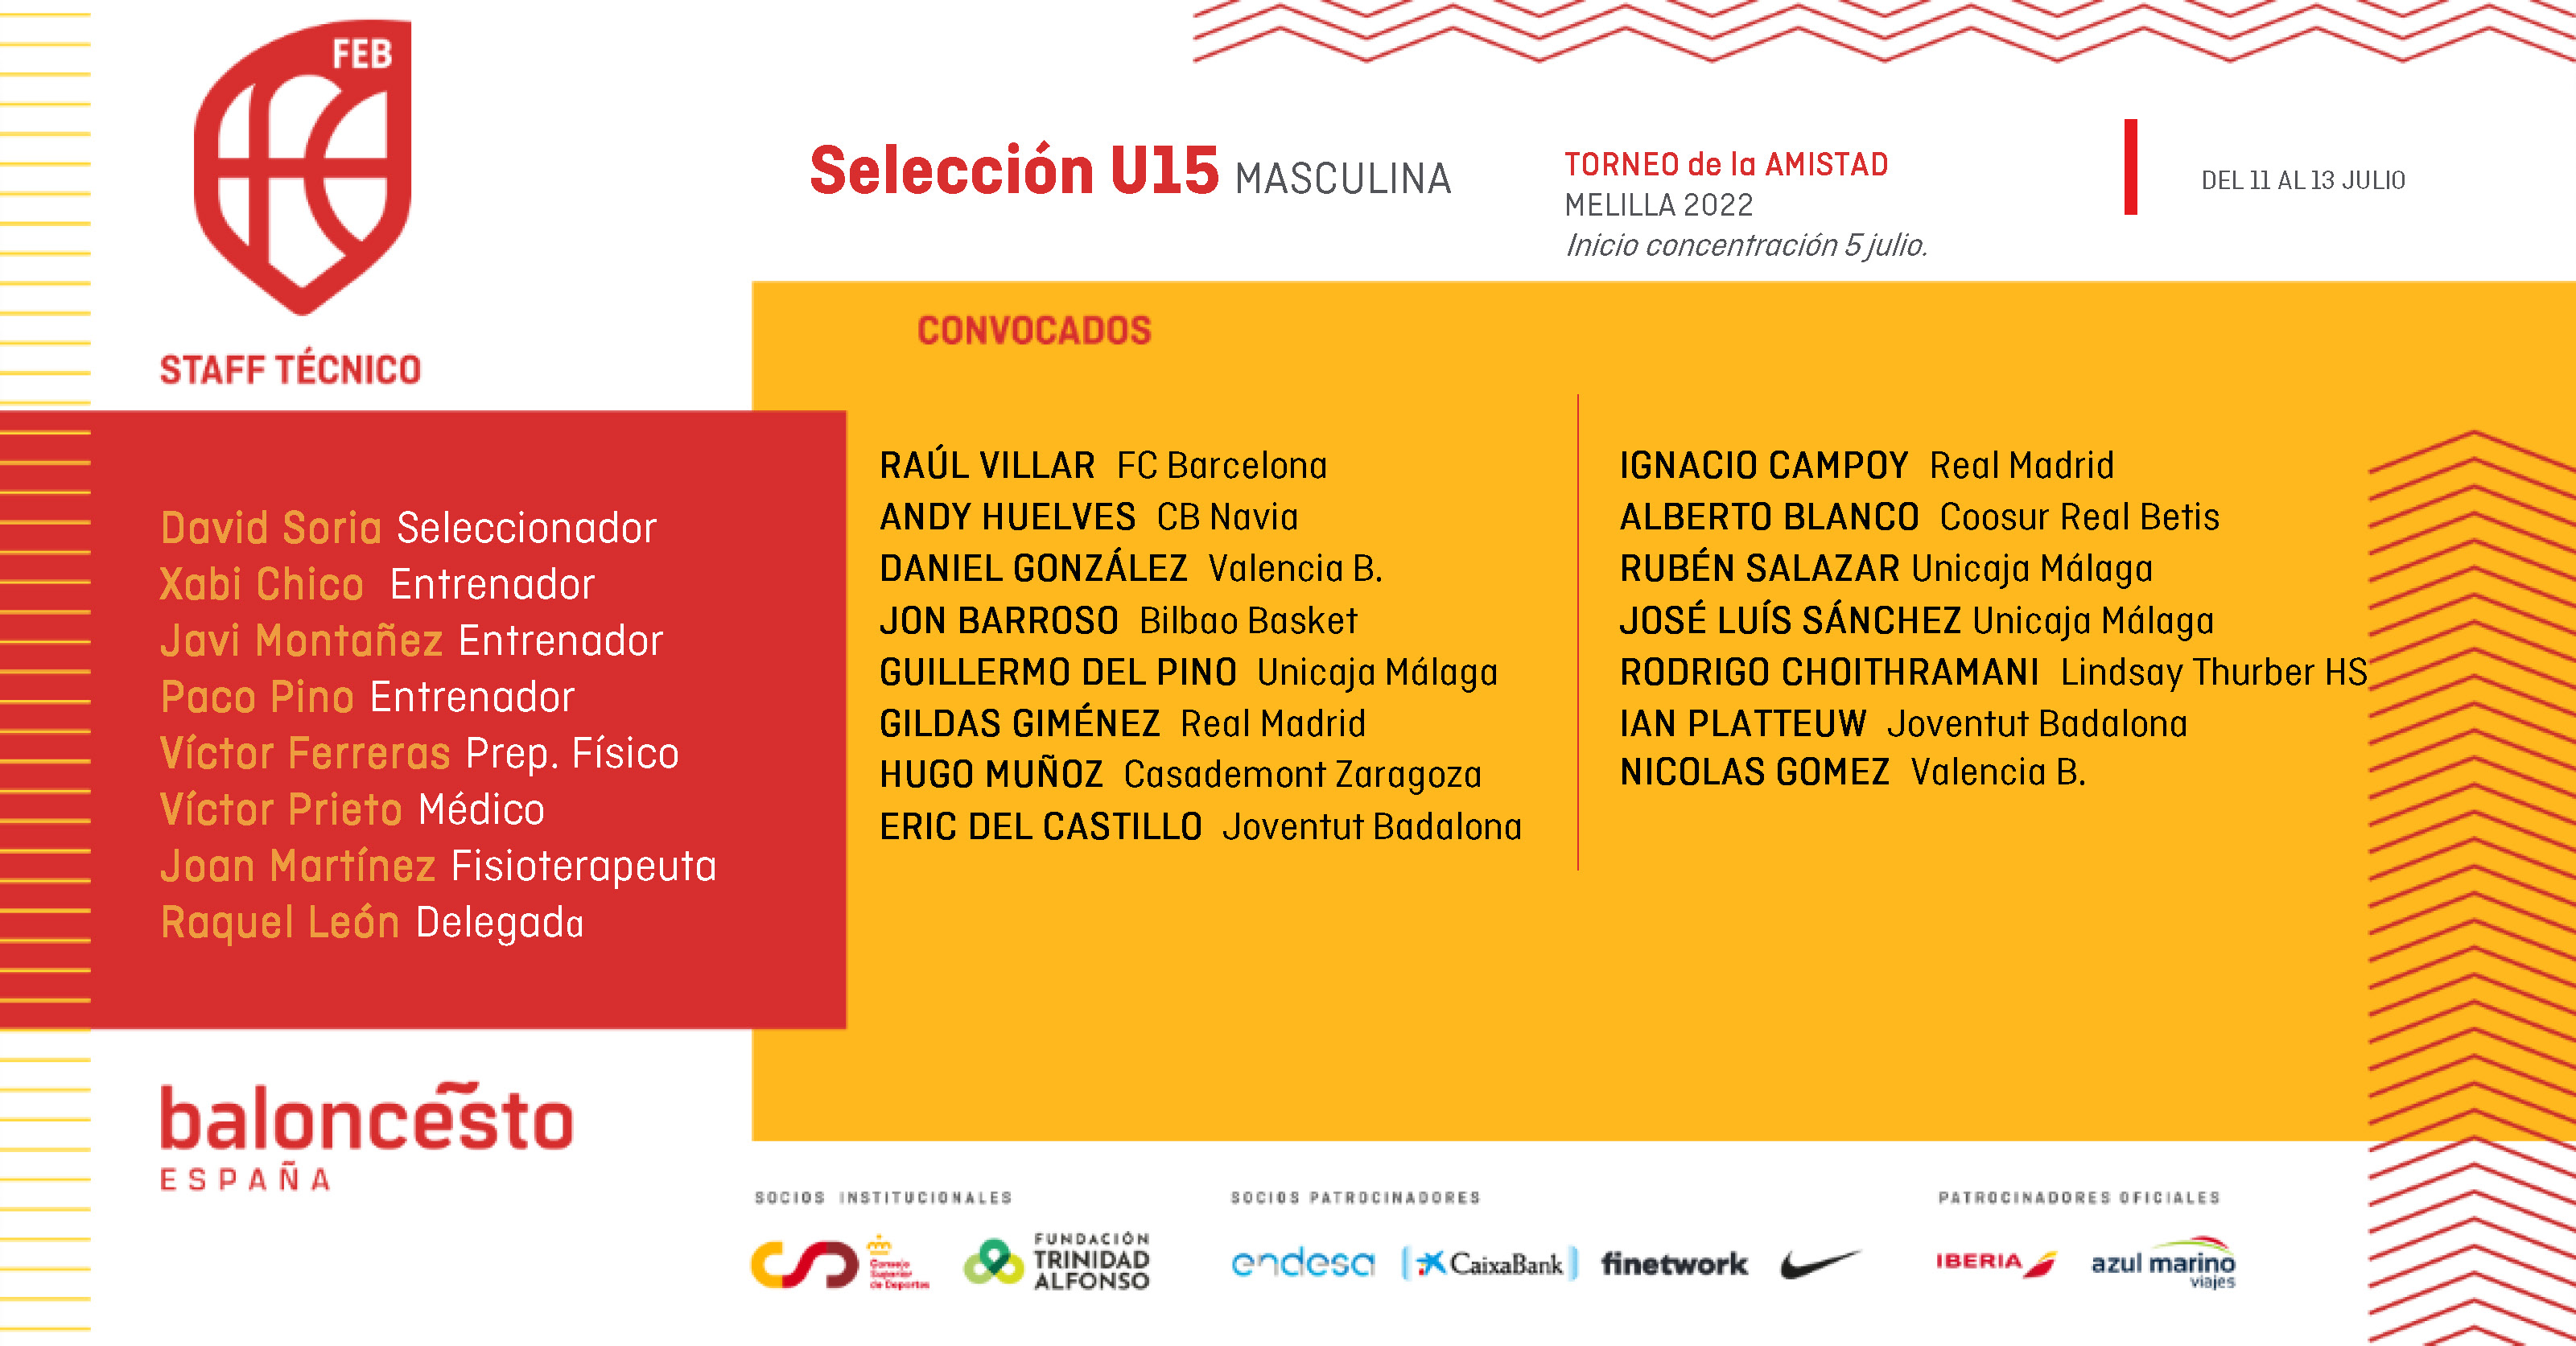 Convocatoria U15M Torneo de la Amistad 2022 (Melilla)